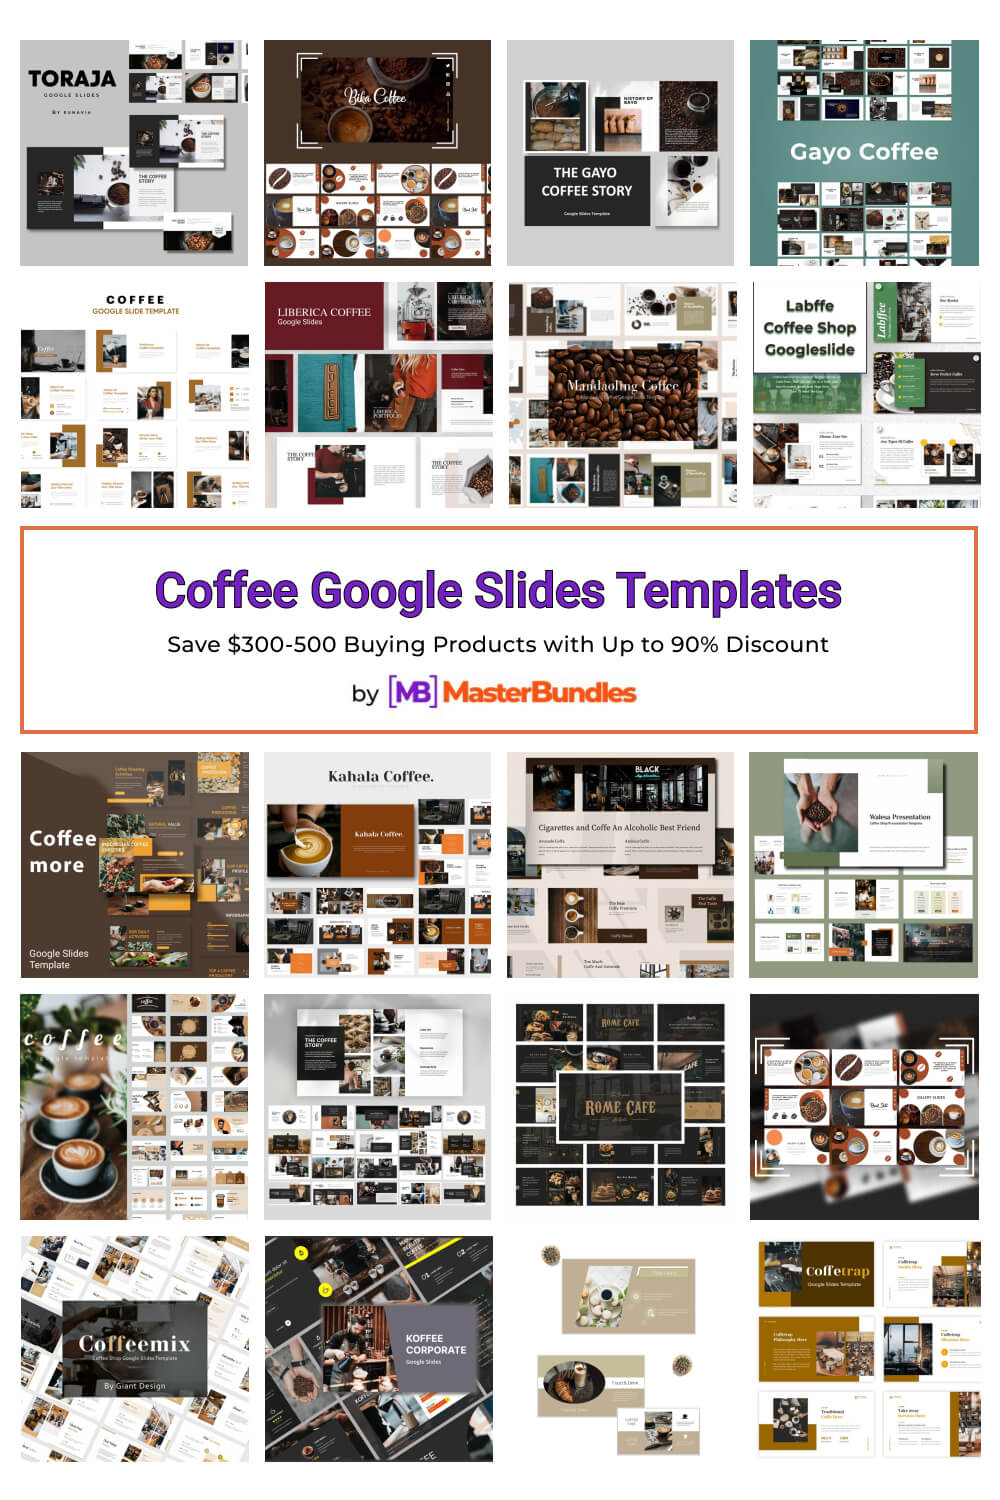 coffee google slides templates pinterest image.